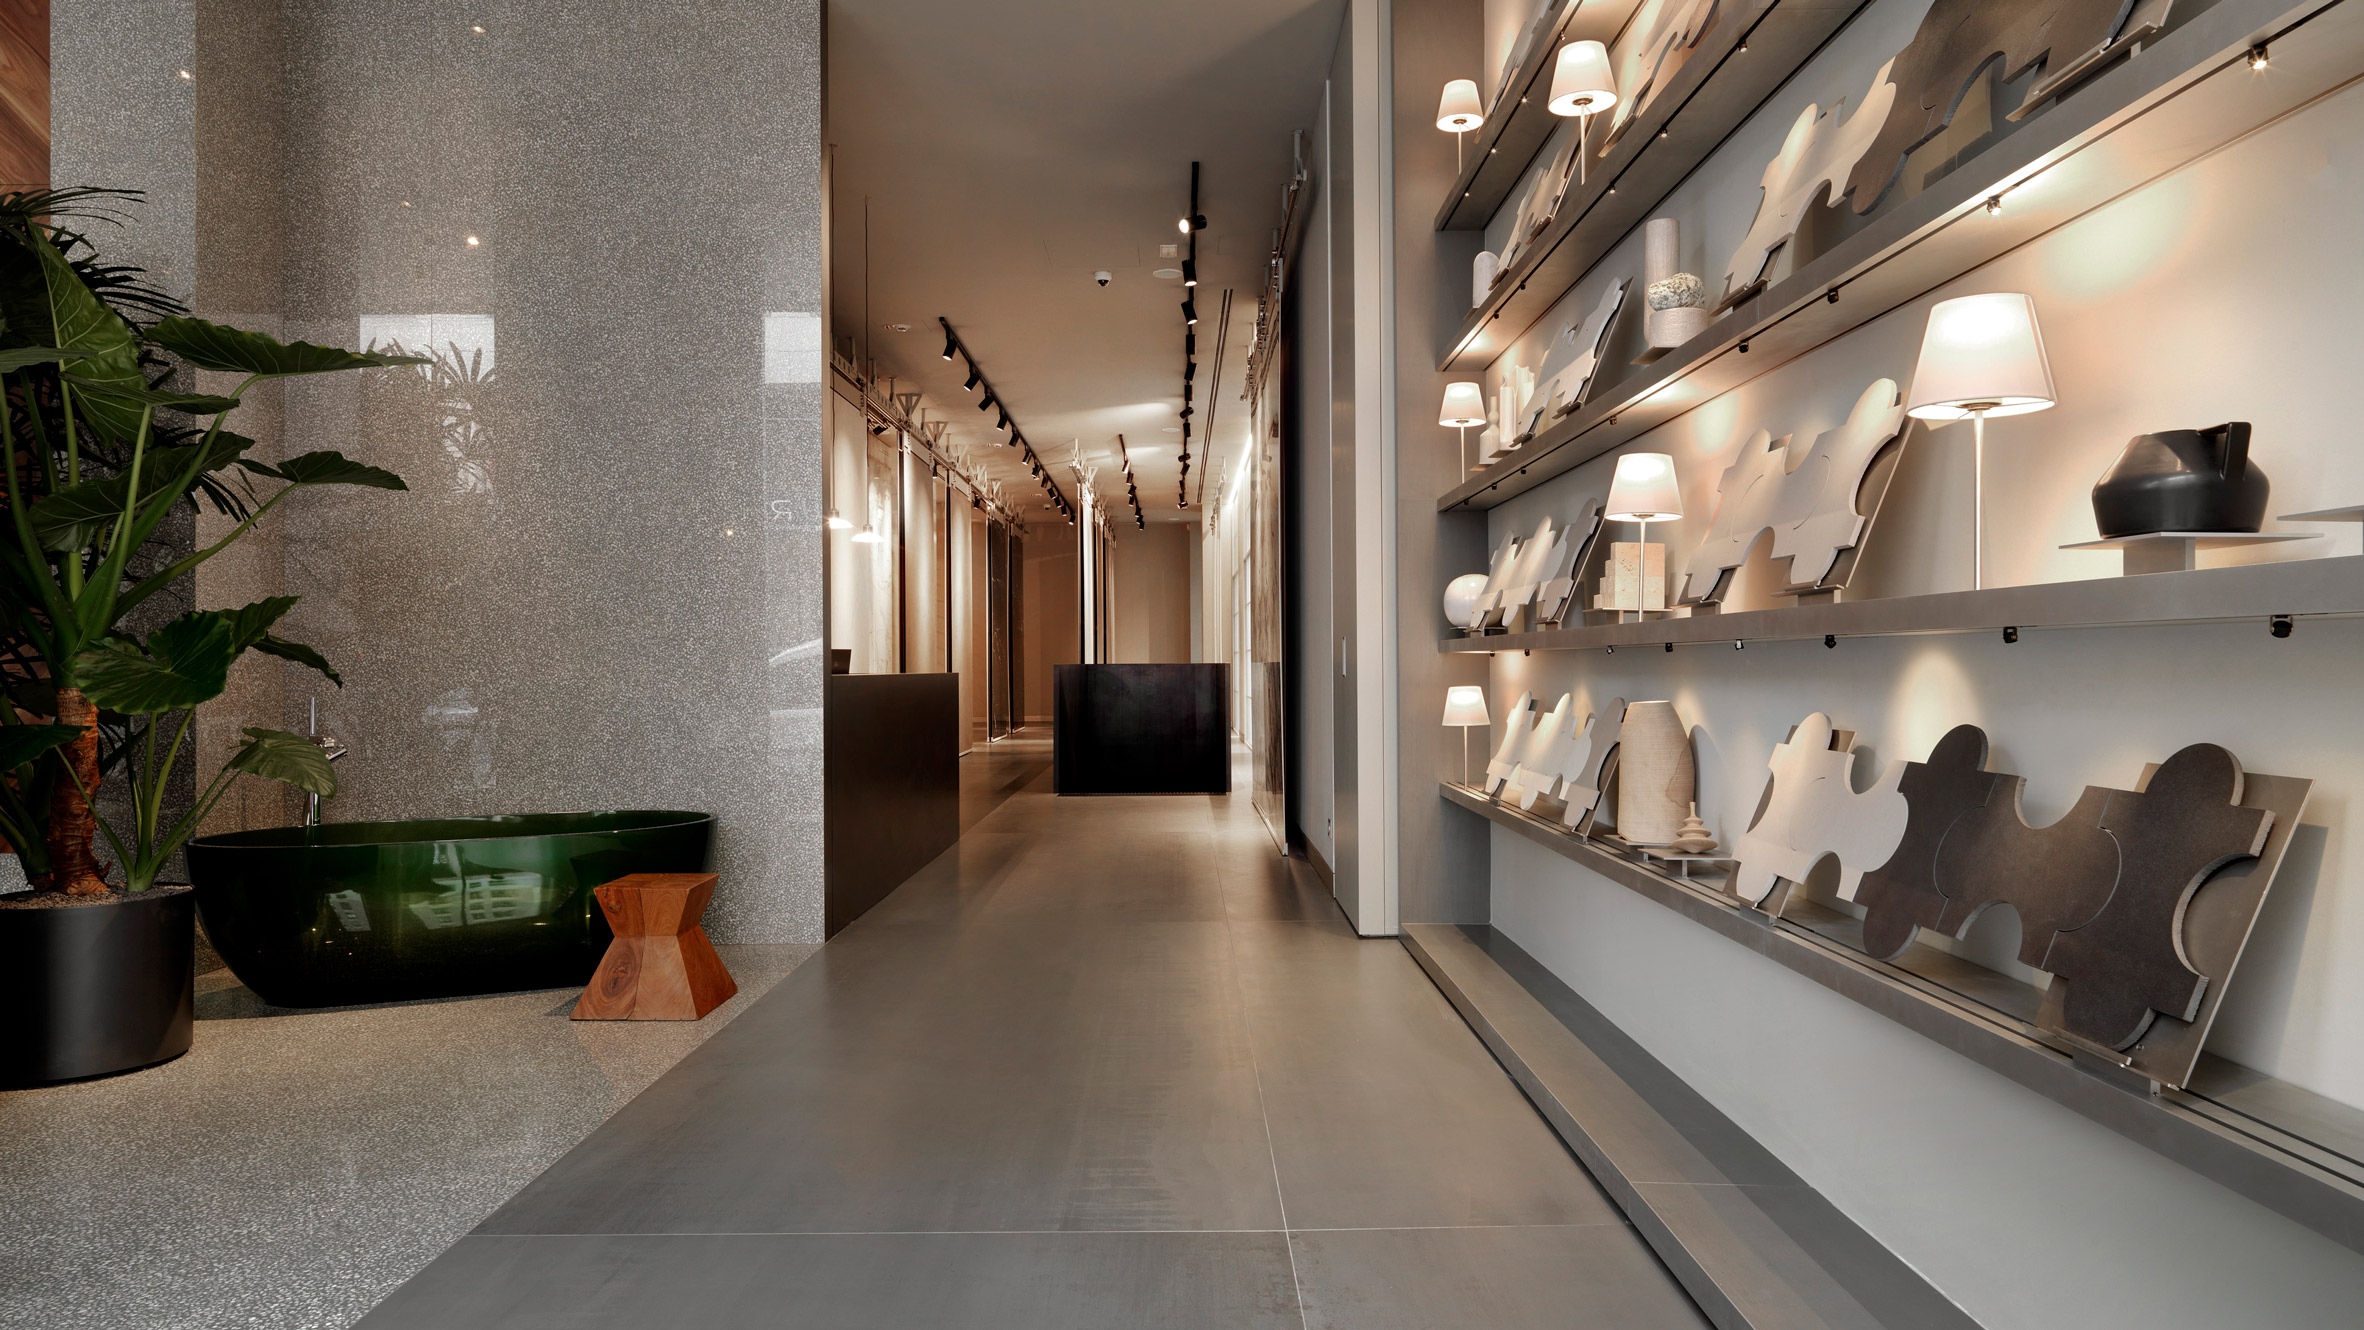 Marazzi showroom in Milan, designed by Antonio Citterio and Patricia Viel